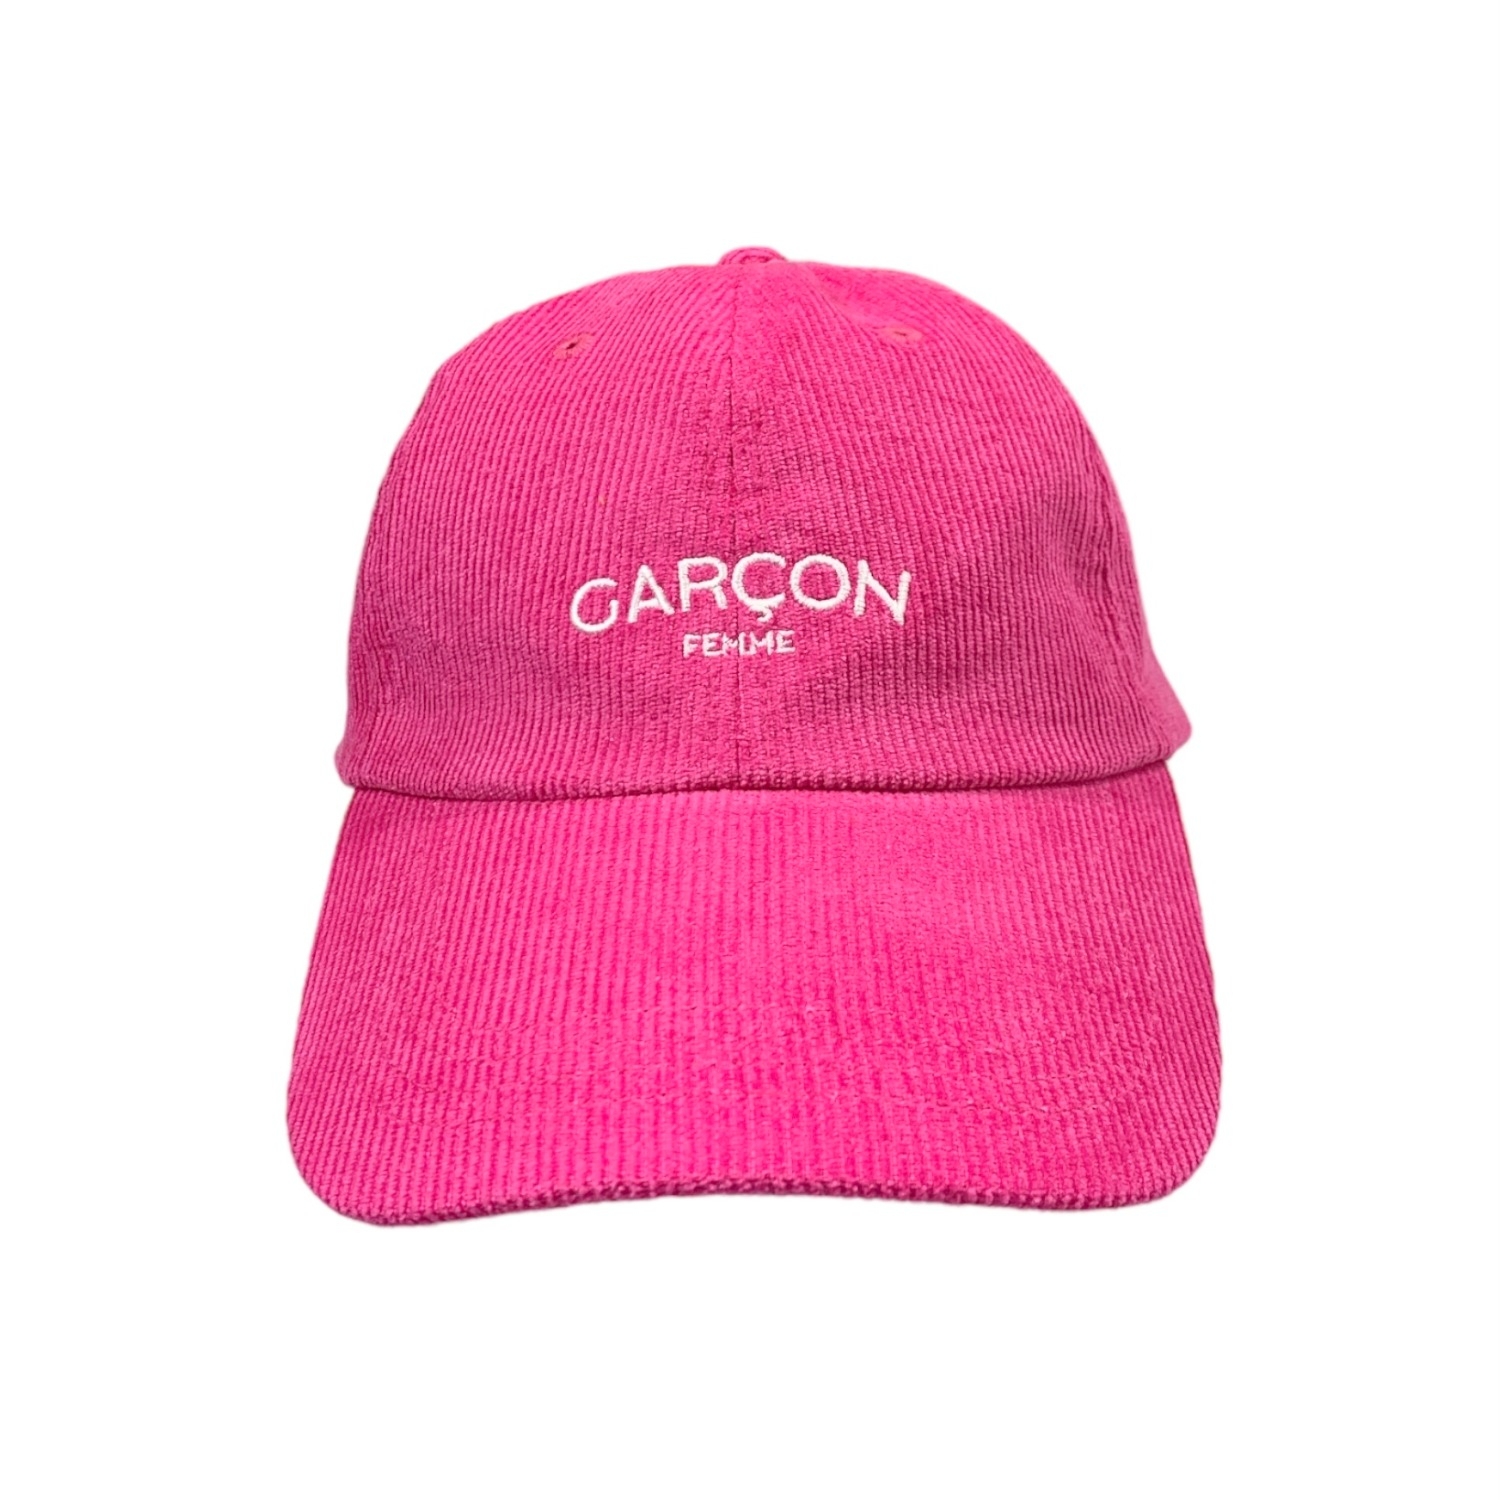 Garcon Cap - Femme (Ruby Pink)